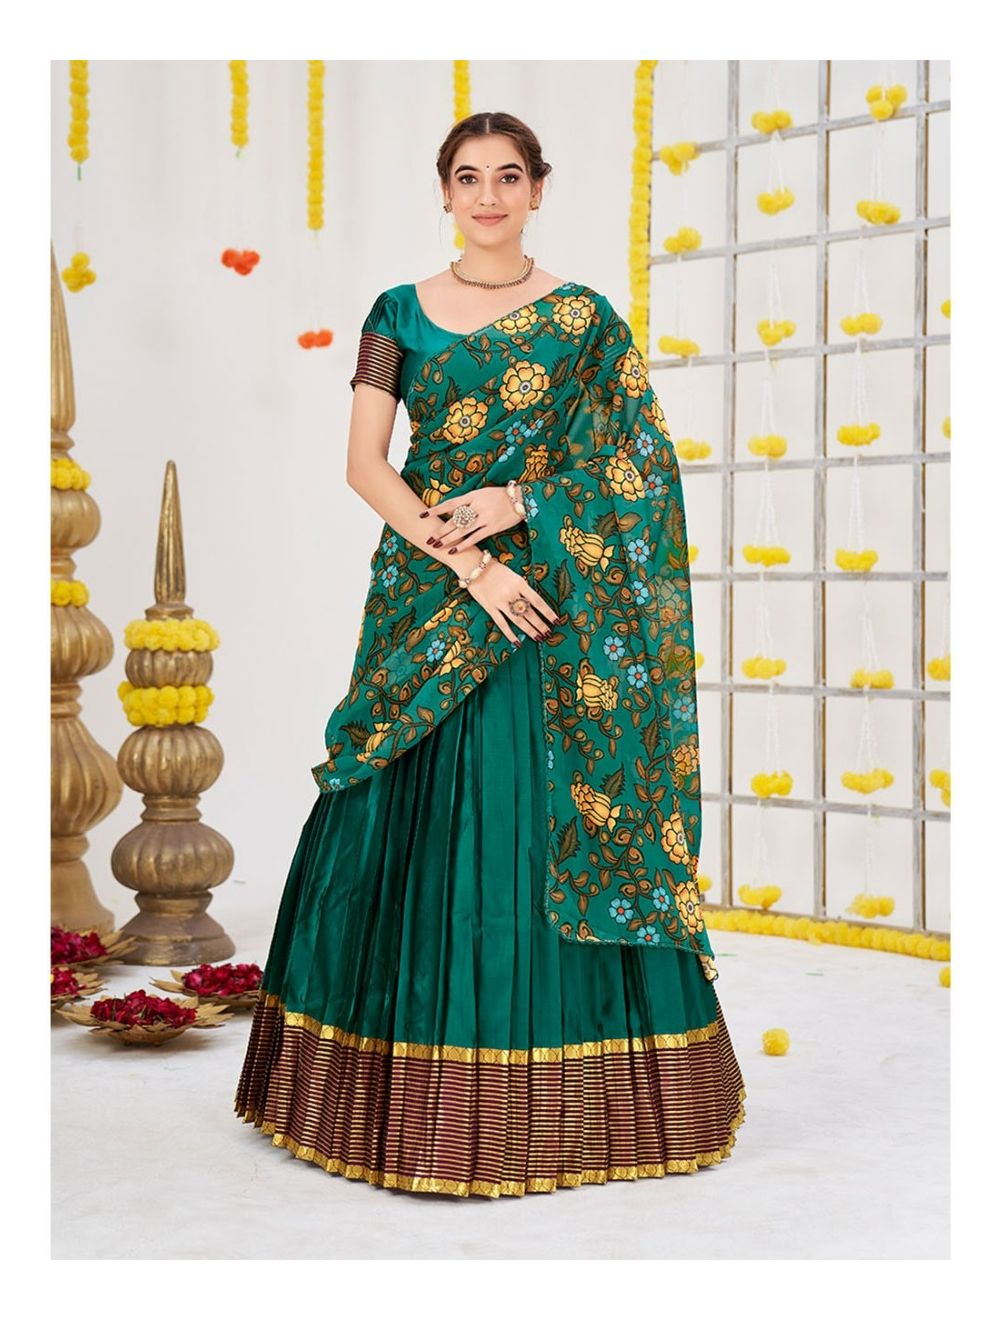 Wedding Wear Gota Work Designer Half Saree Lehenga, 6 m (with blouse piece)  at Rs 1449 in Surat